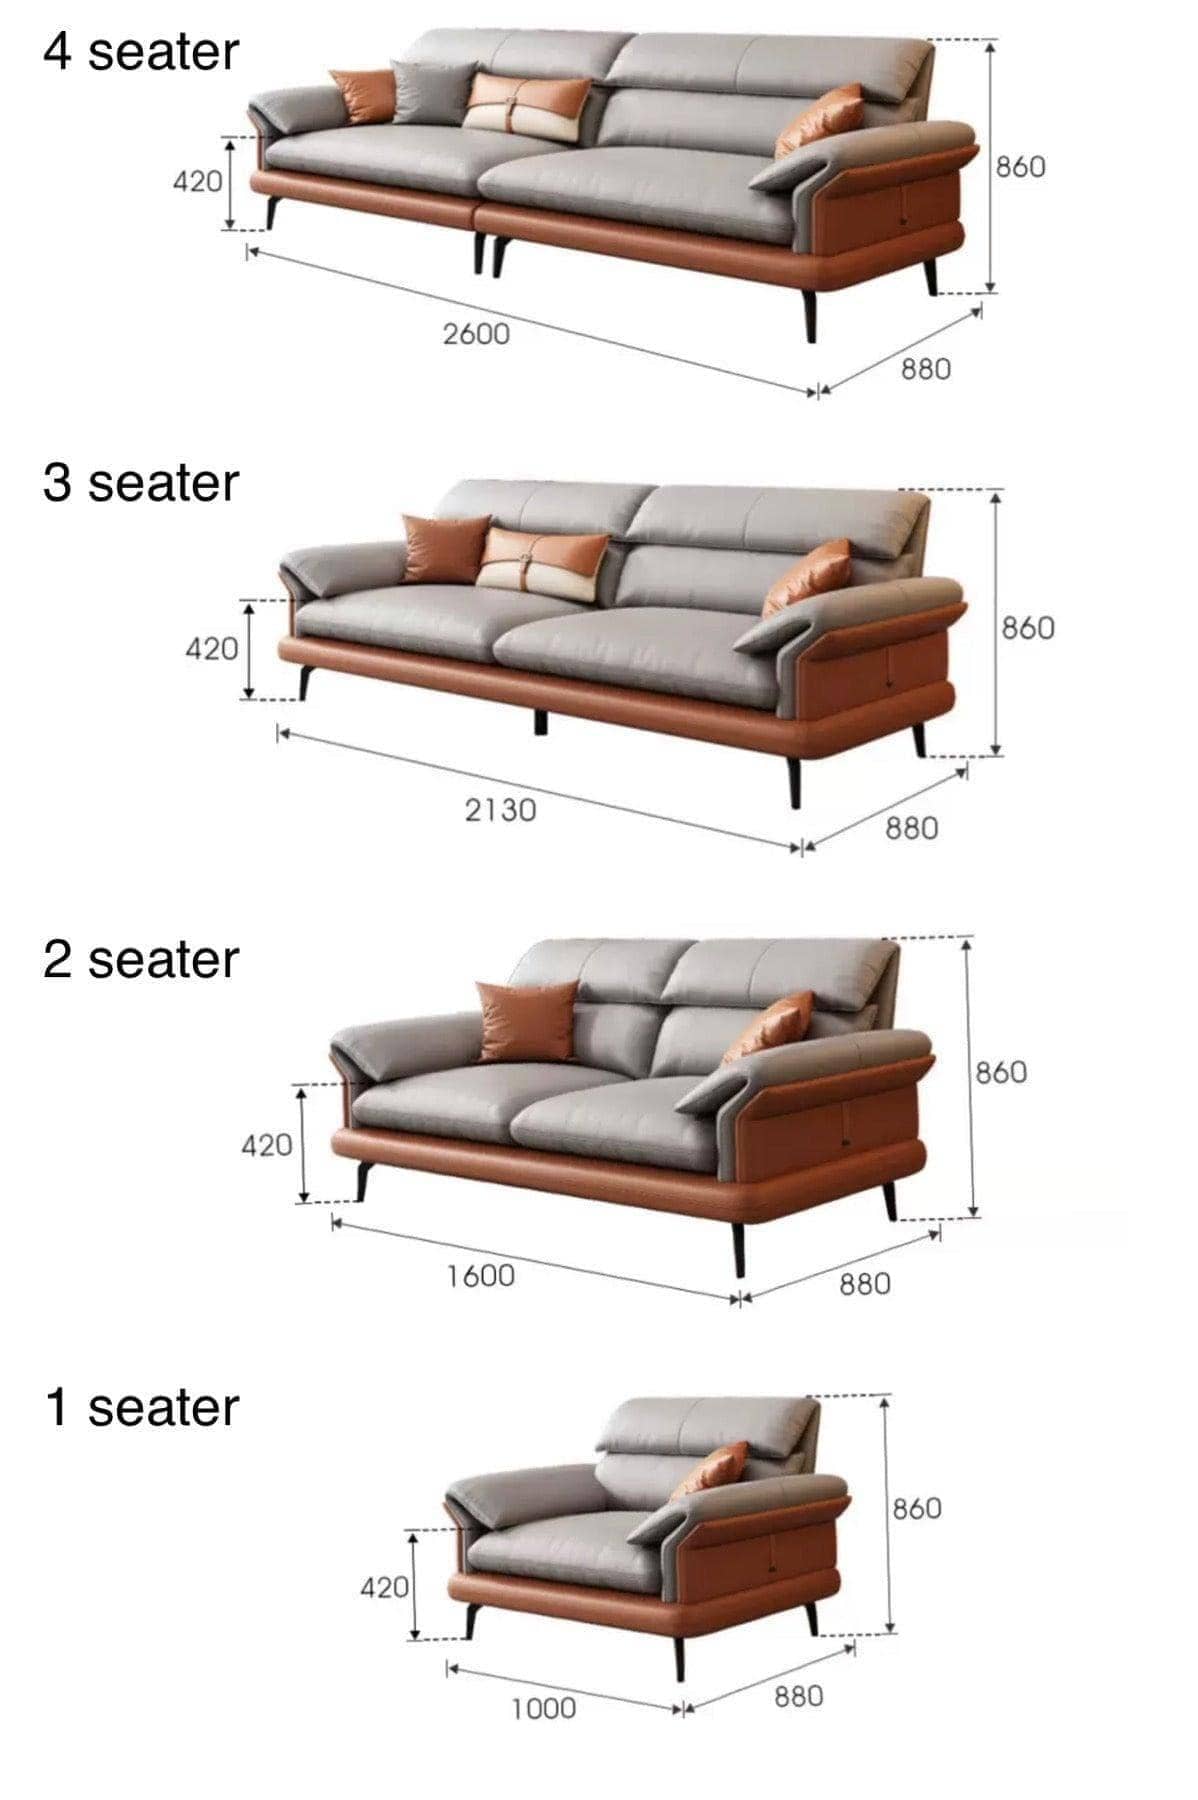 Home Atelier Adena Leather Sofa